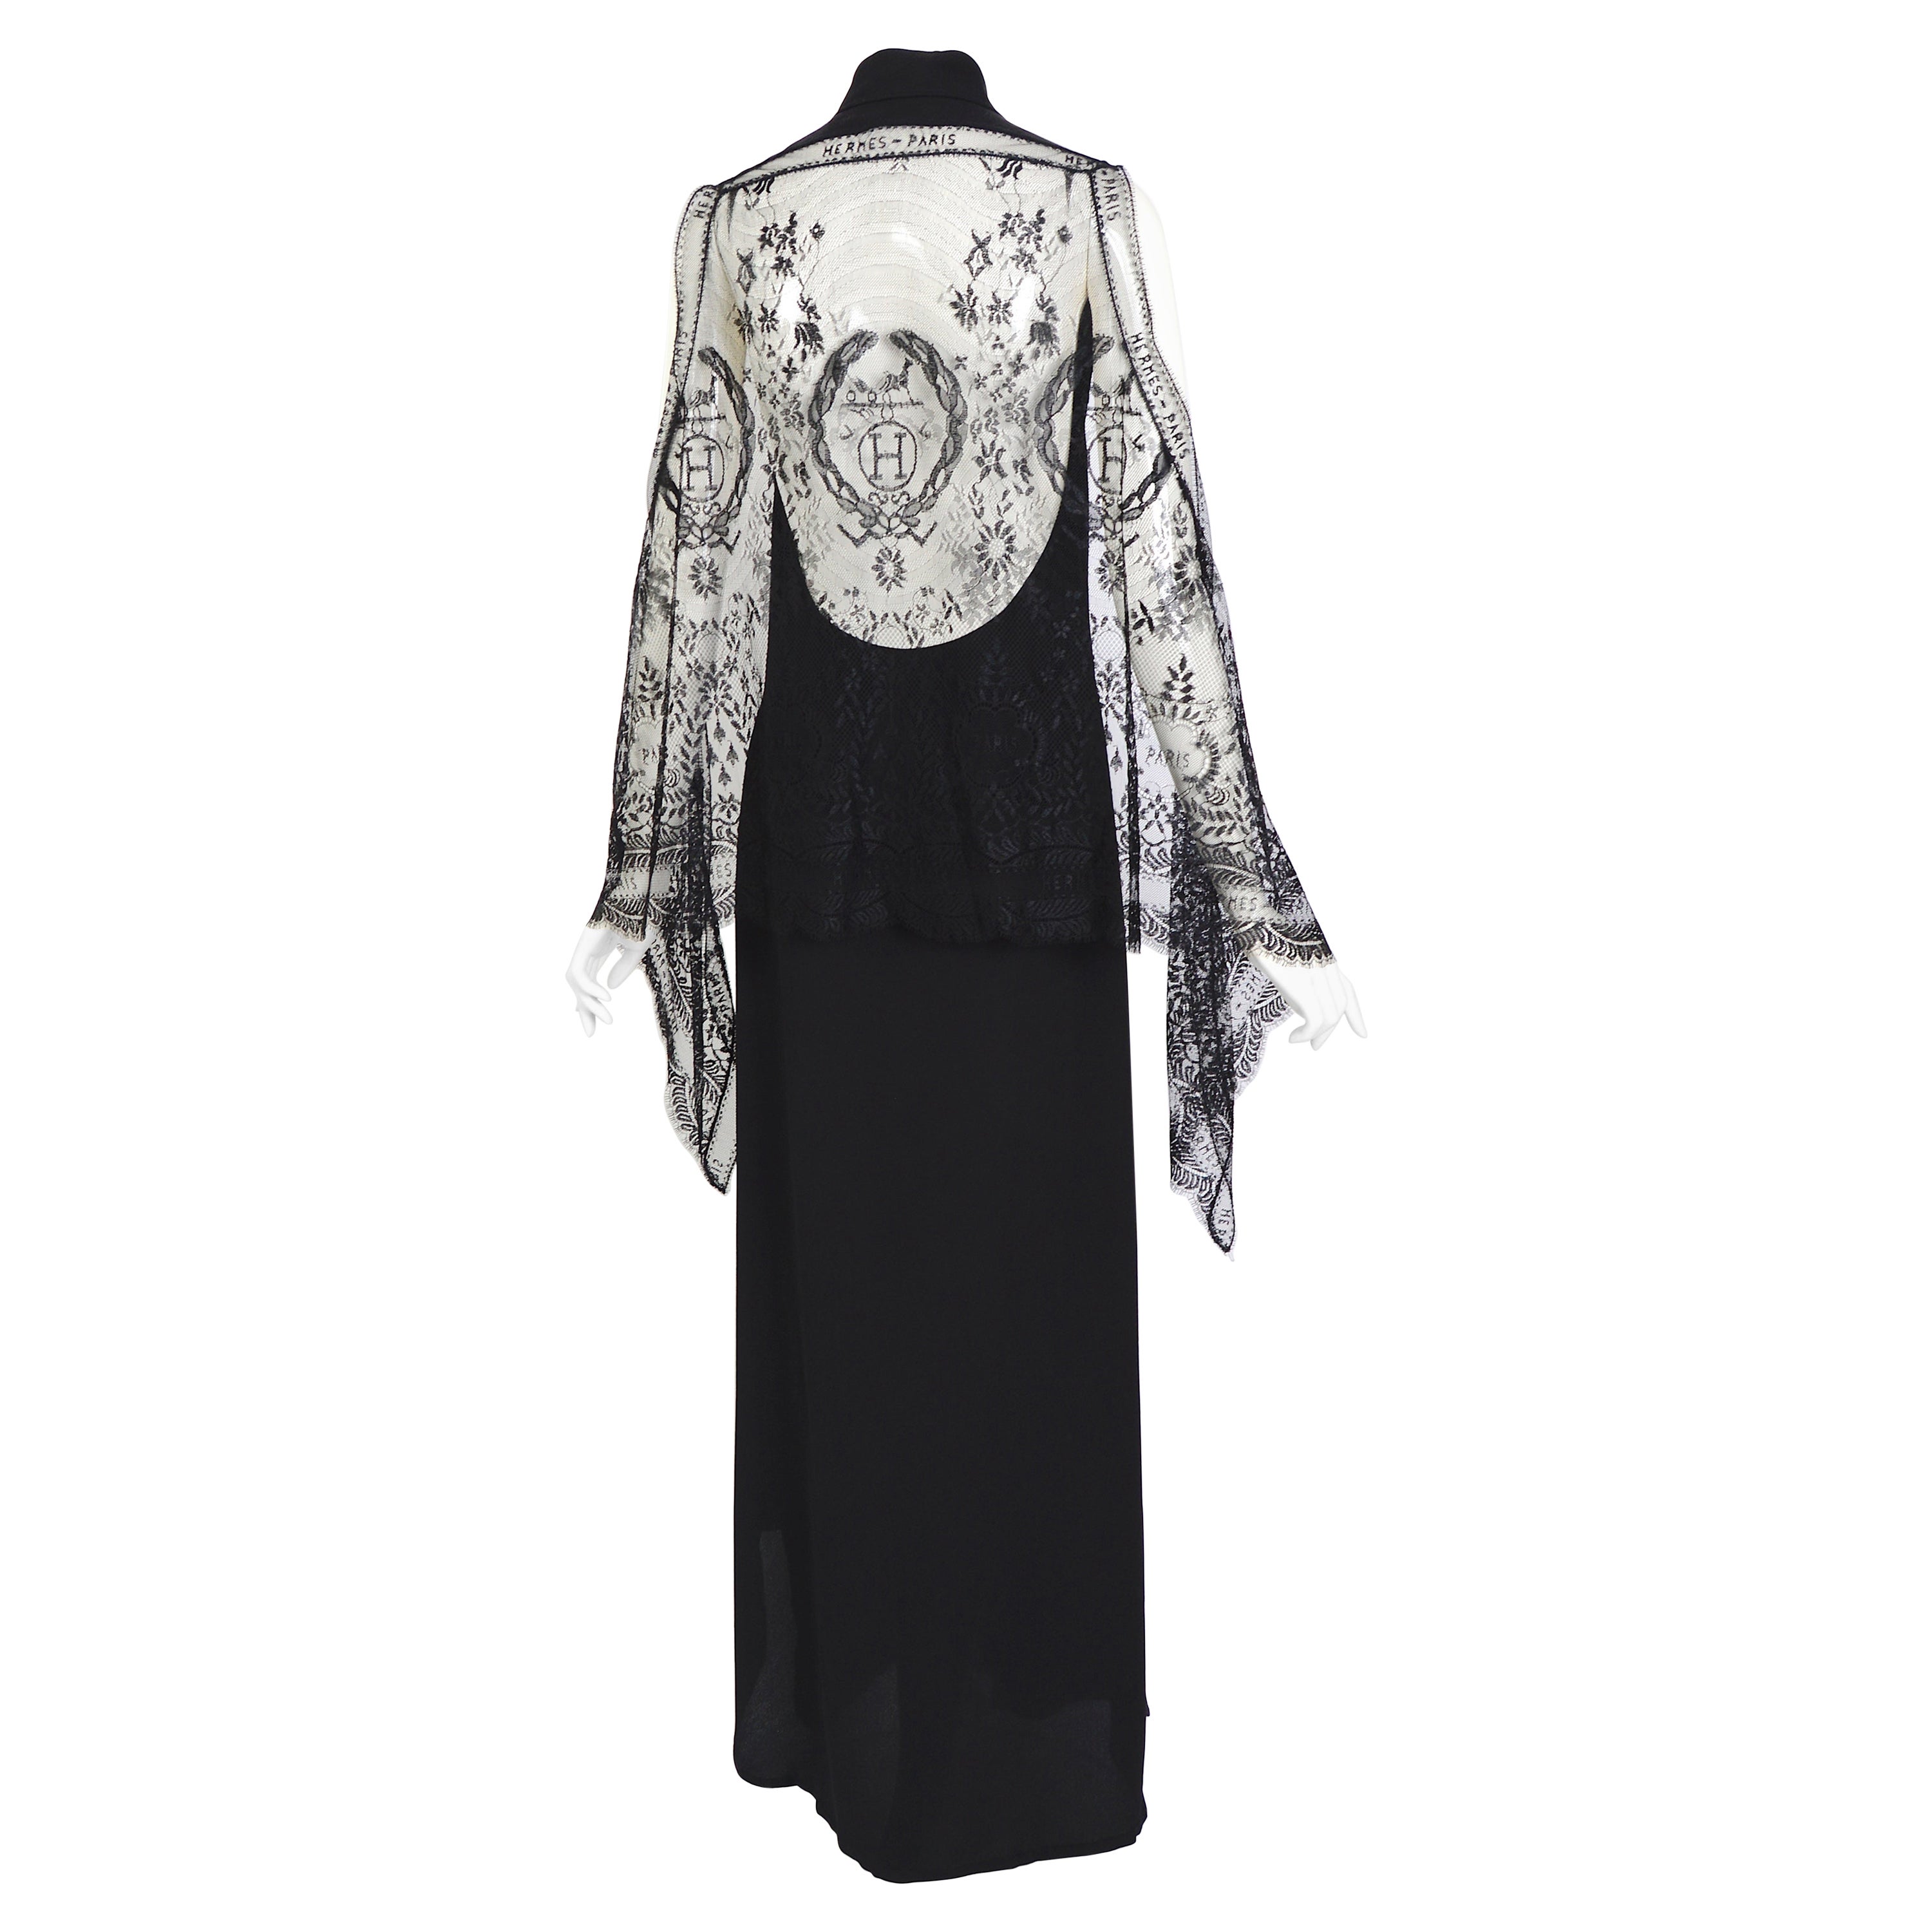 Hermes by Jean Paul Gaultier runway 2006 black guipure lace and silk long dress